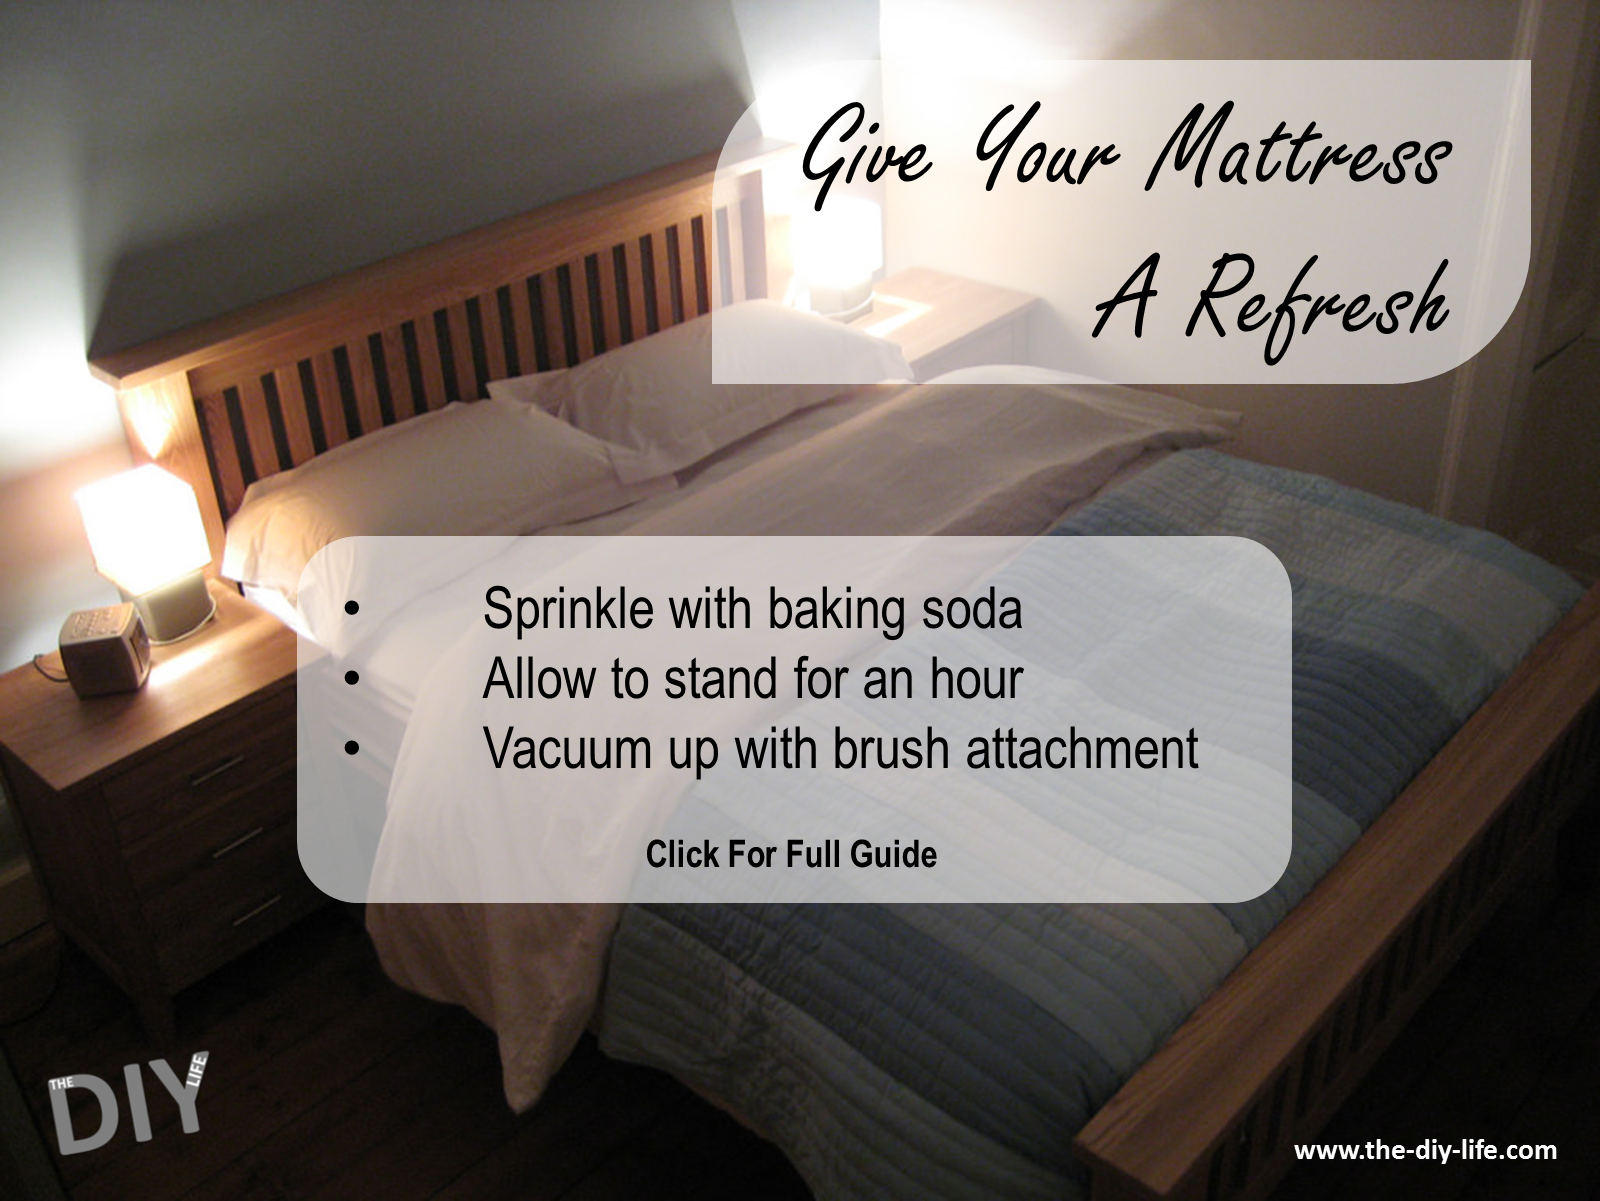 Give your mattress a baking soda refresh